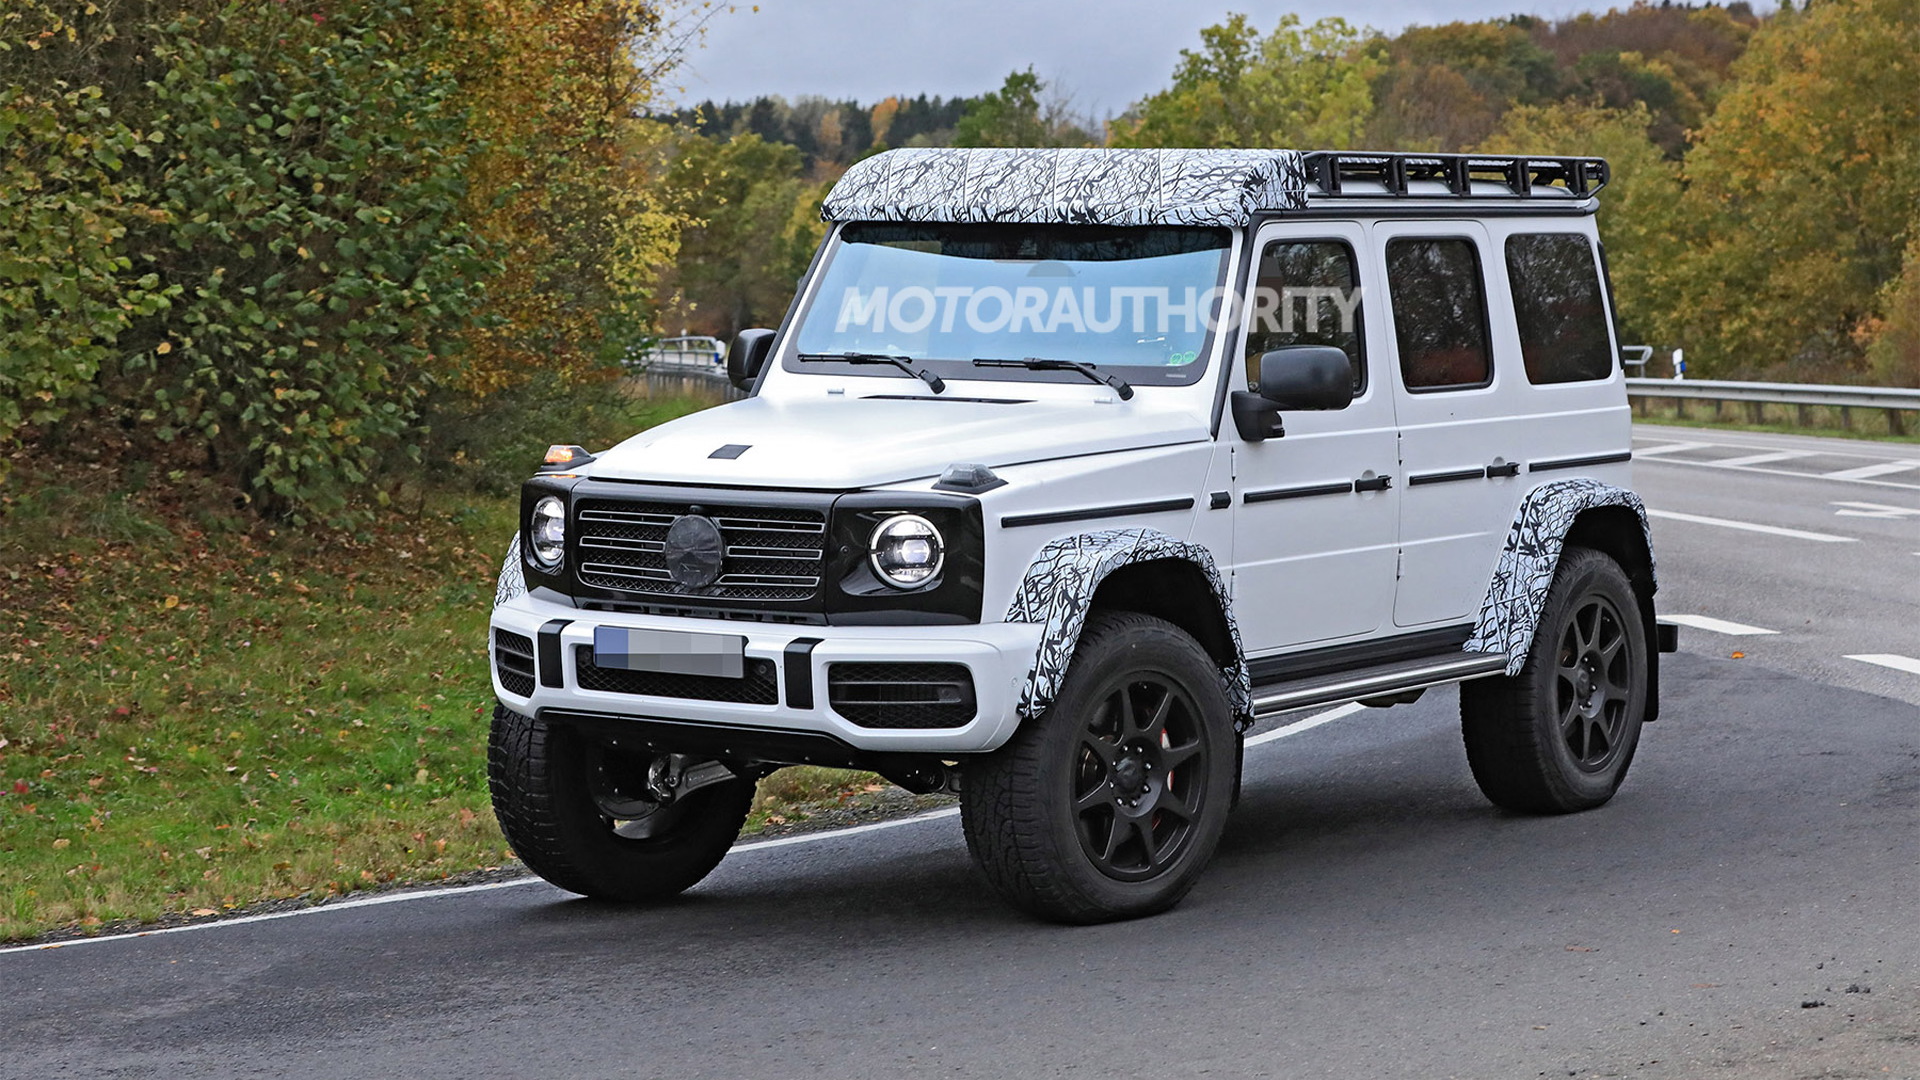 2022 MercedesBenz GClass 4x4 Squared spy shots Luxury monster truck